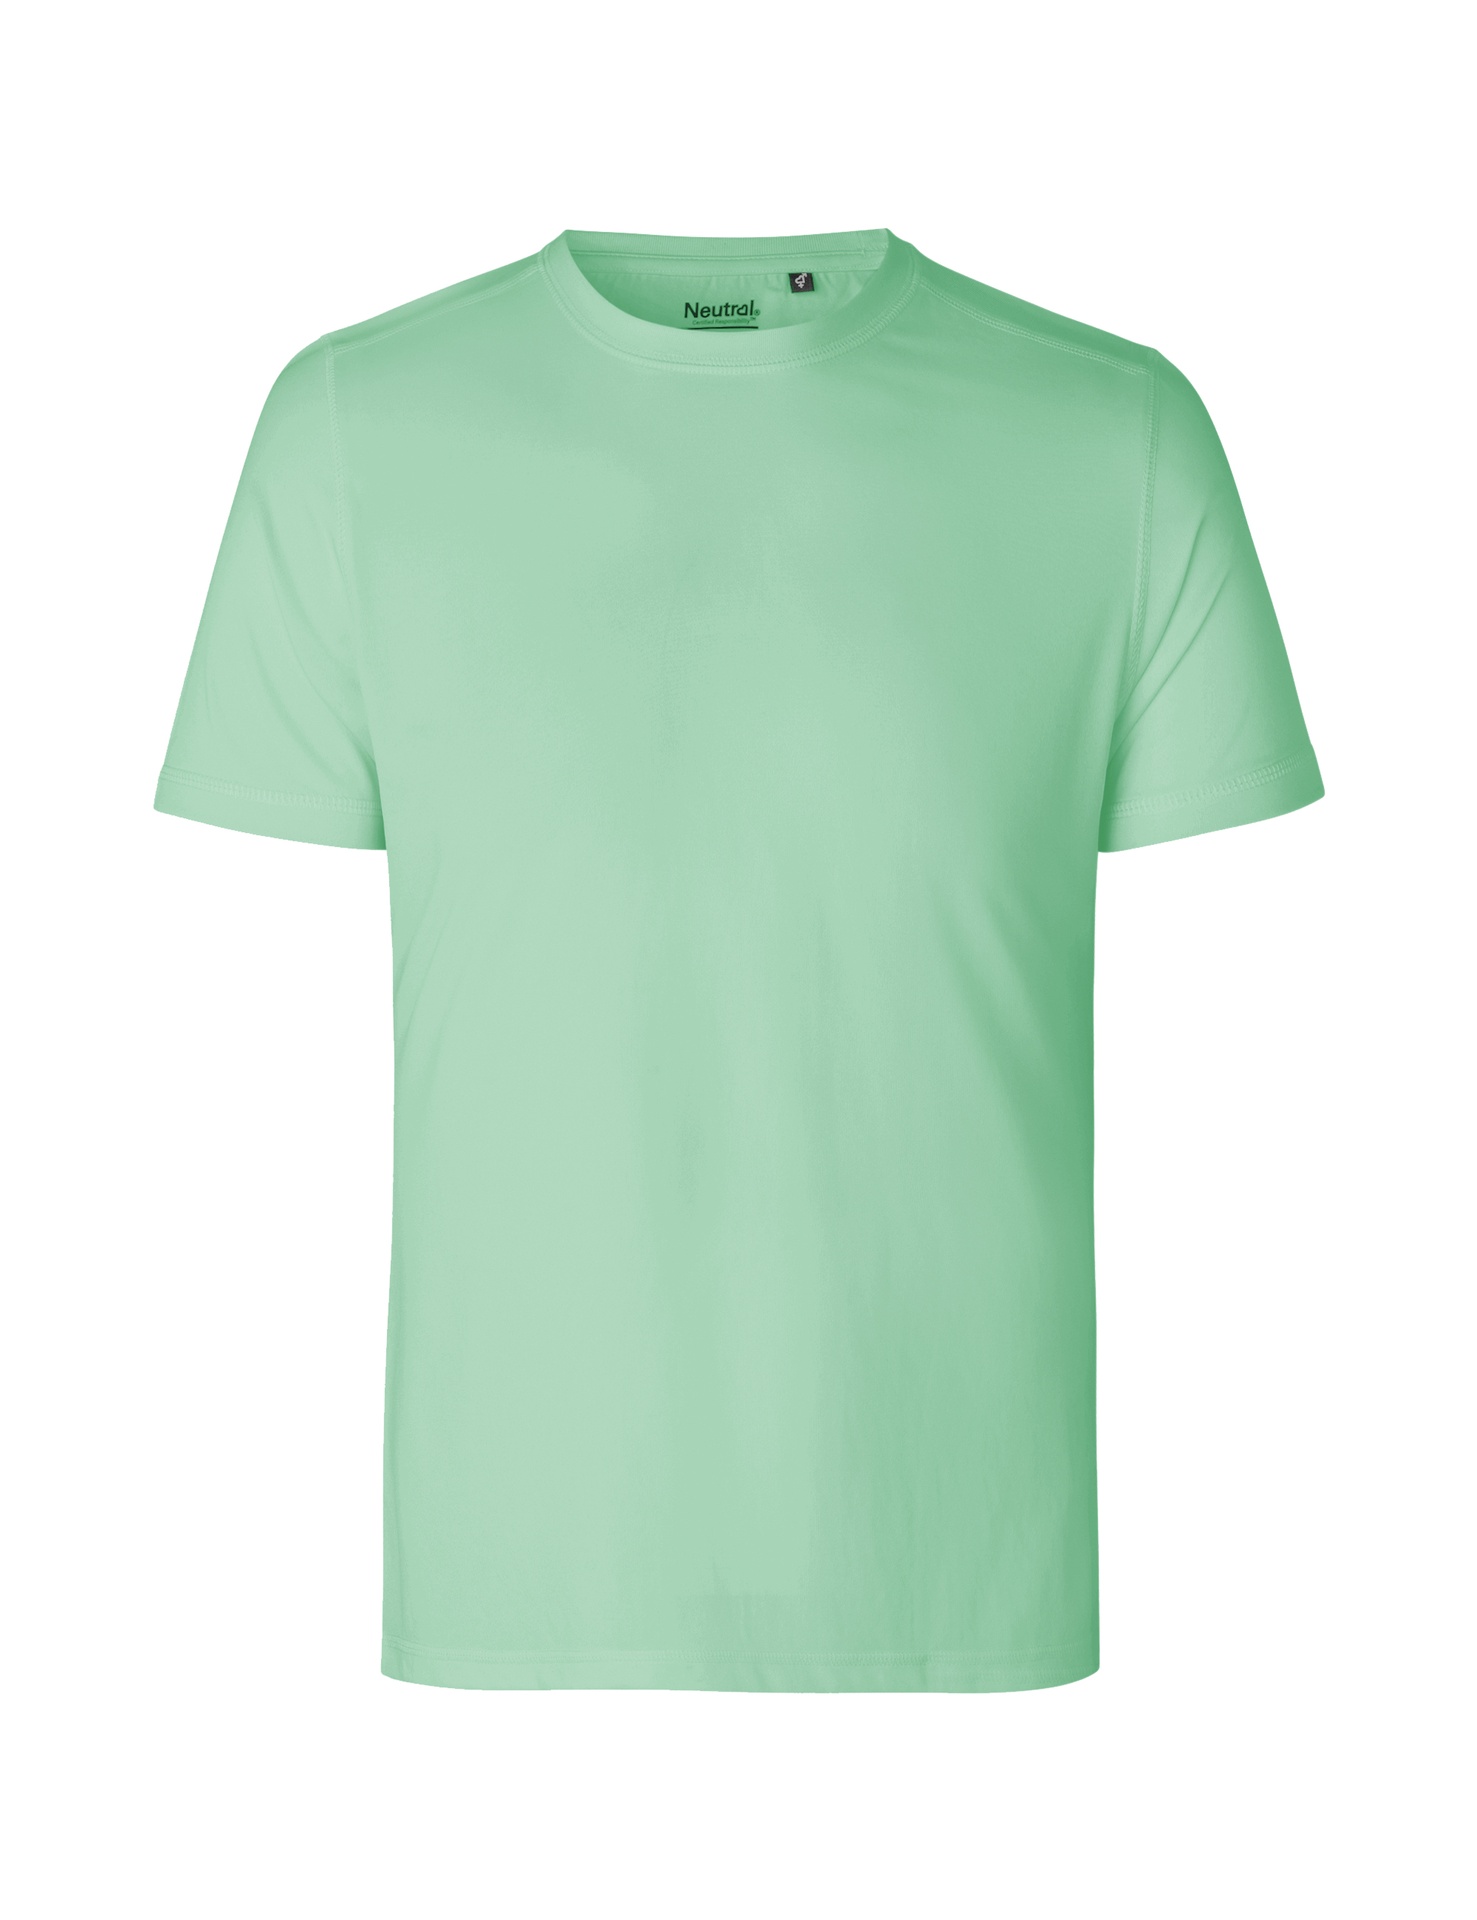 [PR/03800] Recycled Performance T-Shirt (Dusty Mint 40, 2XL)